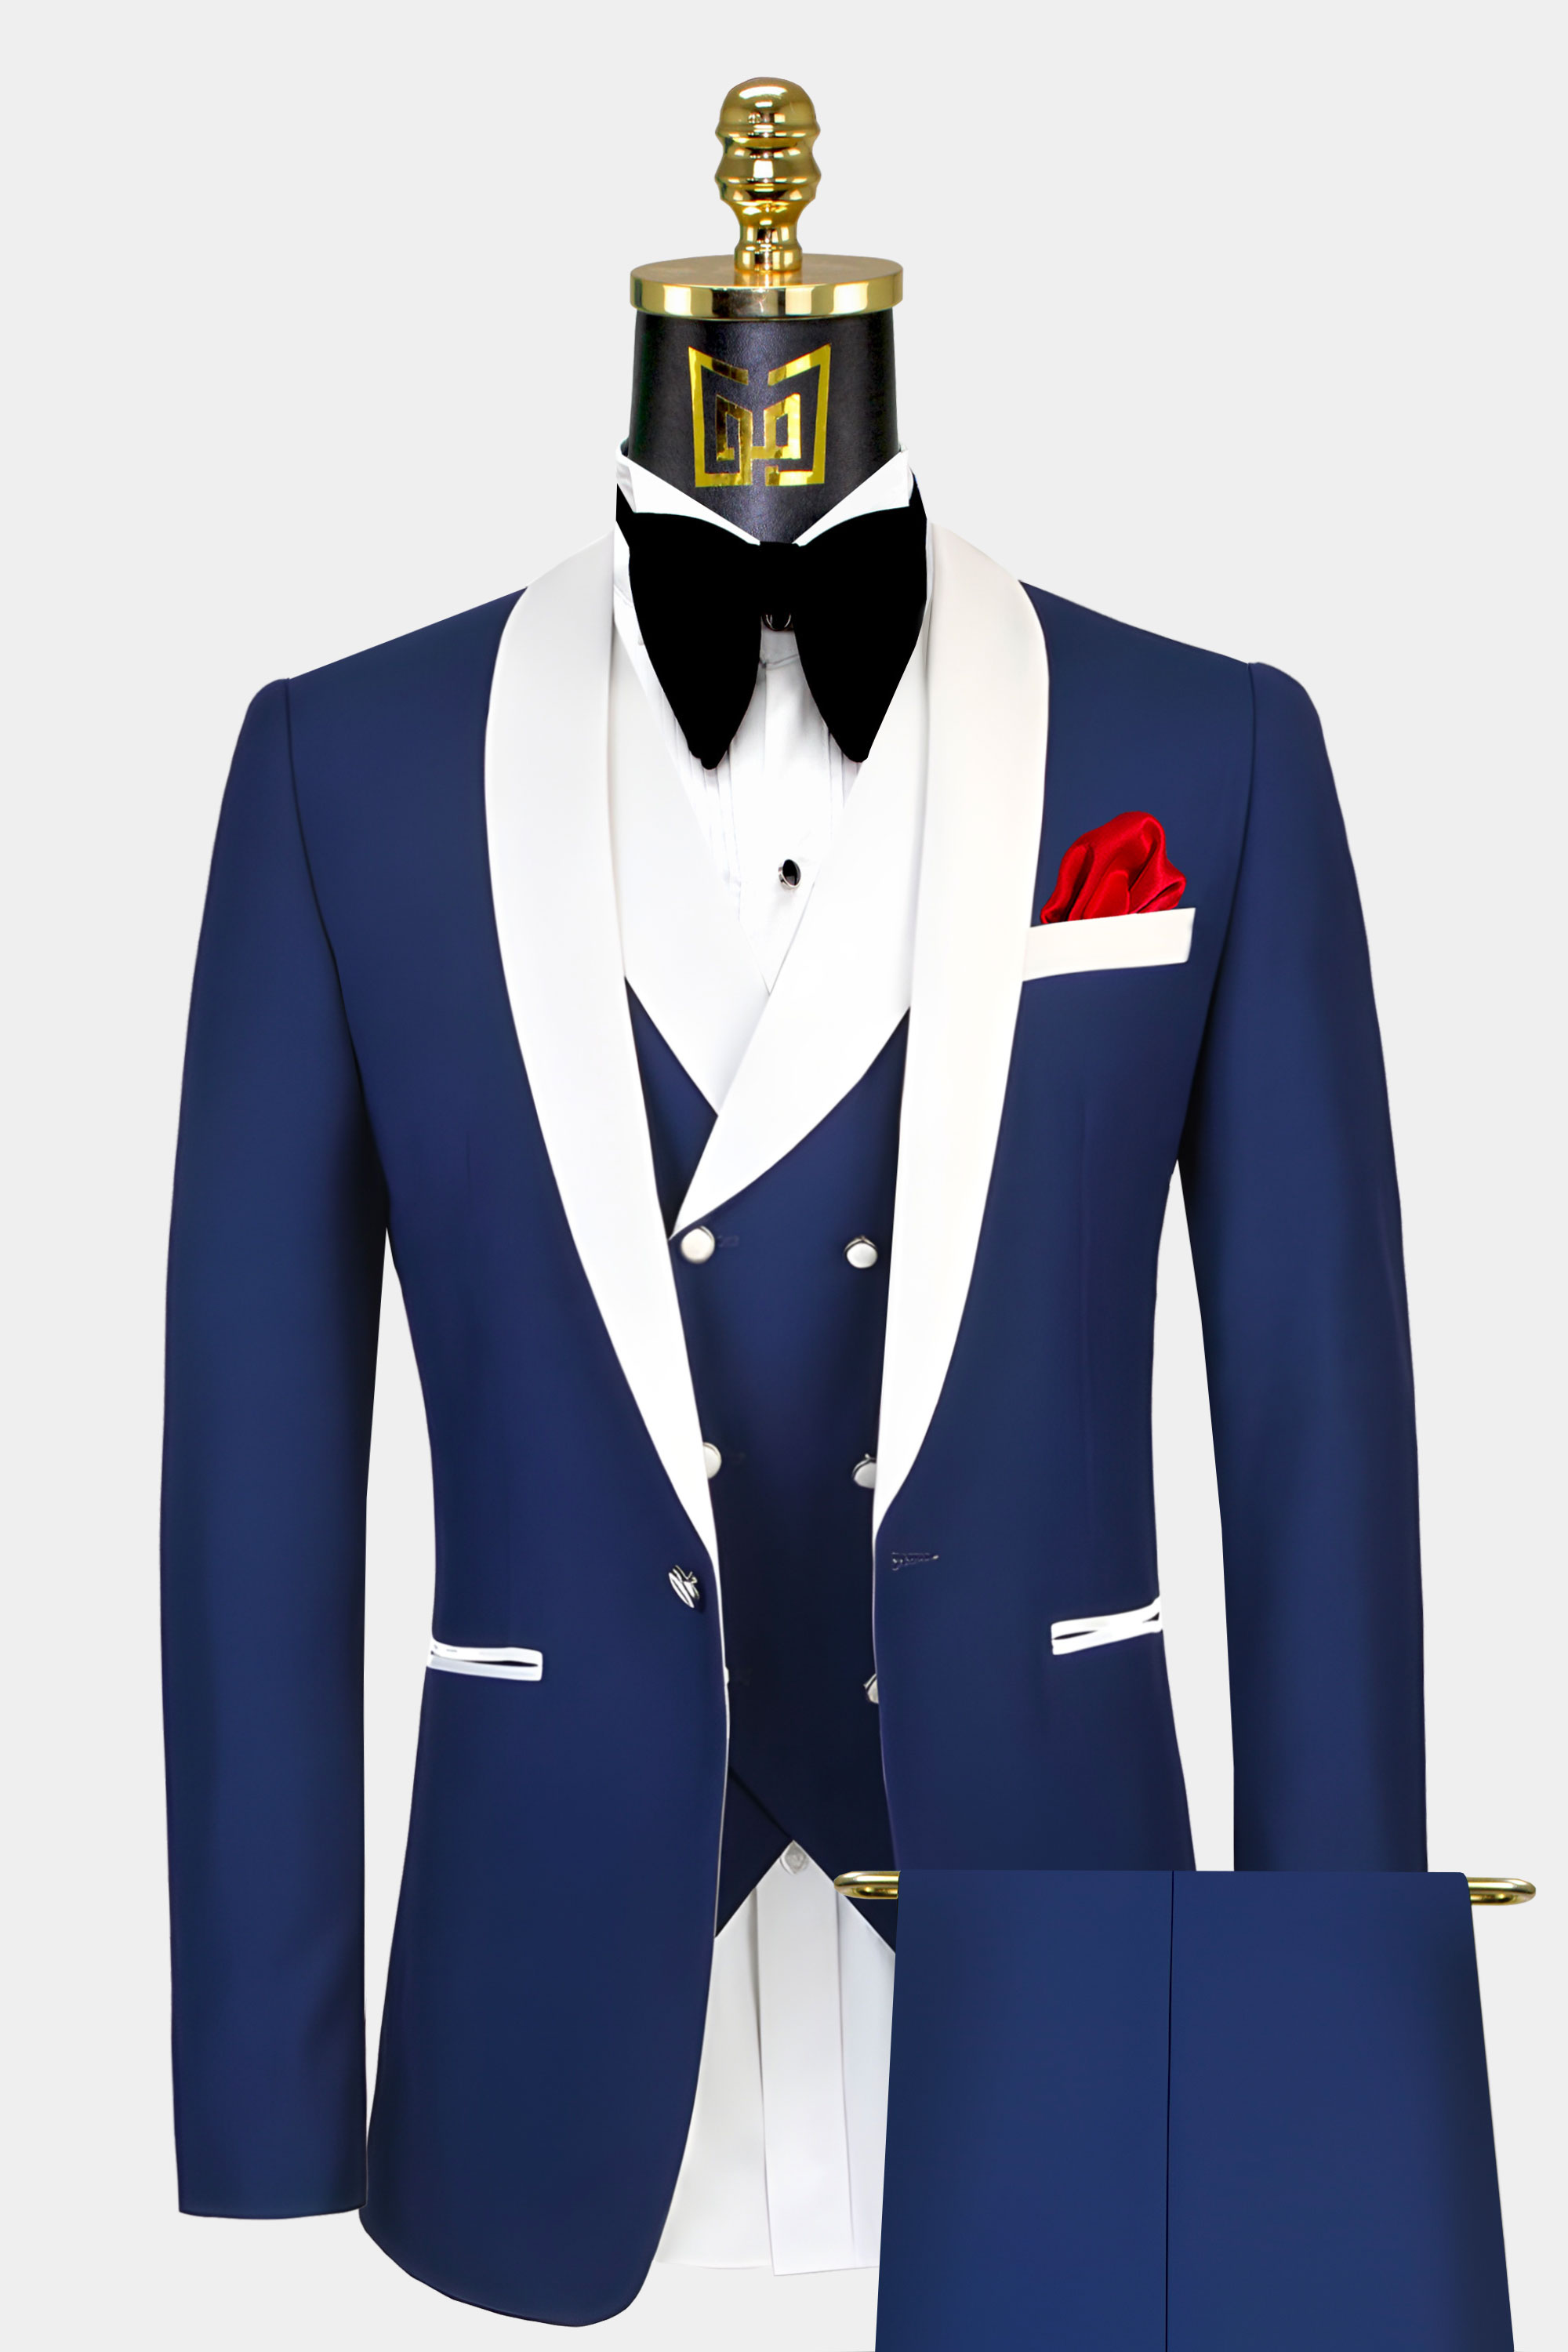 Navy-Blue-and-White-Tuxedo-Groom-Wedding-Prom-Suit-from-Gentlemansguru.com